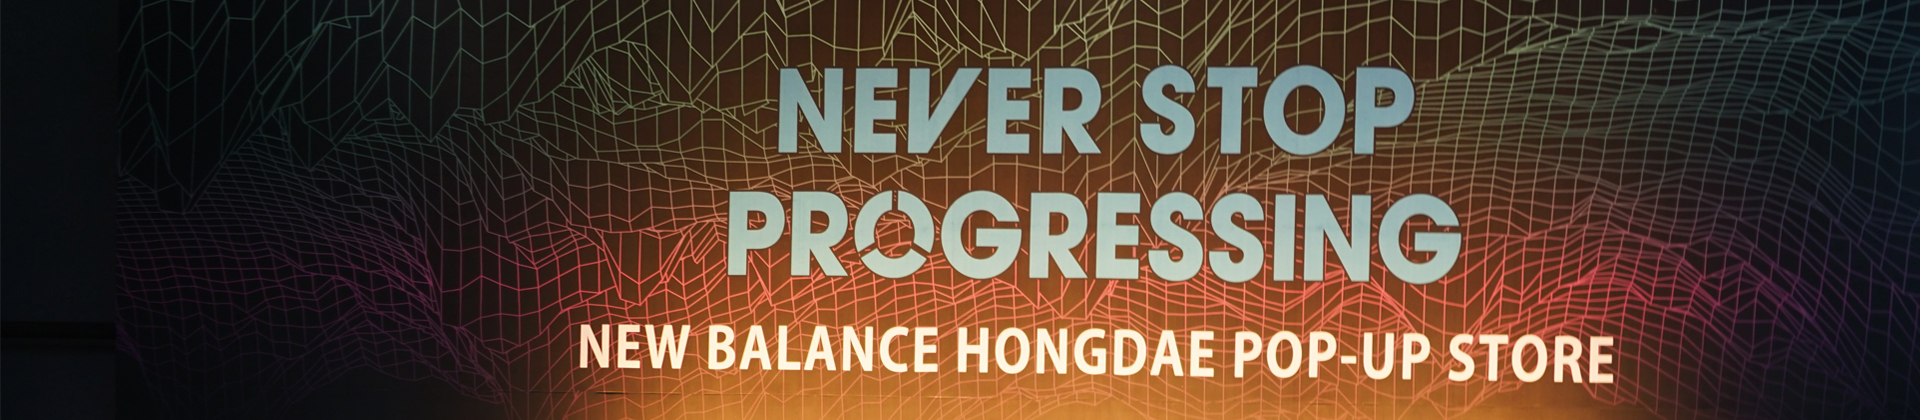 new balance slogan 2018